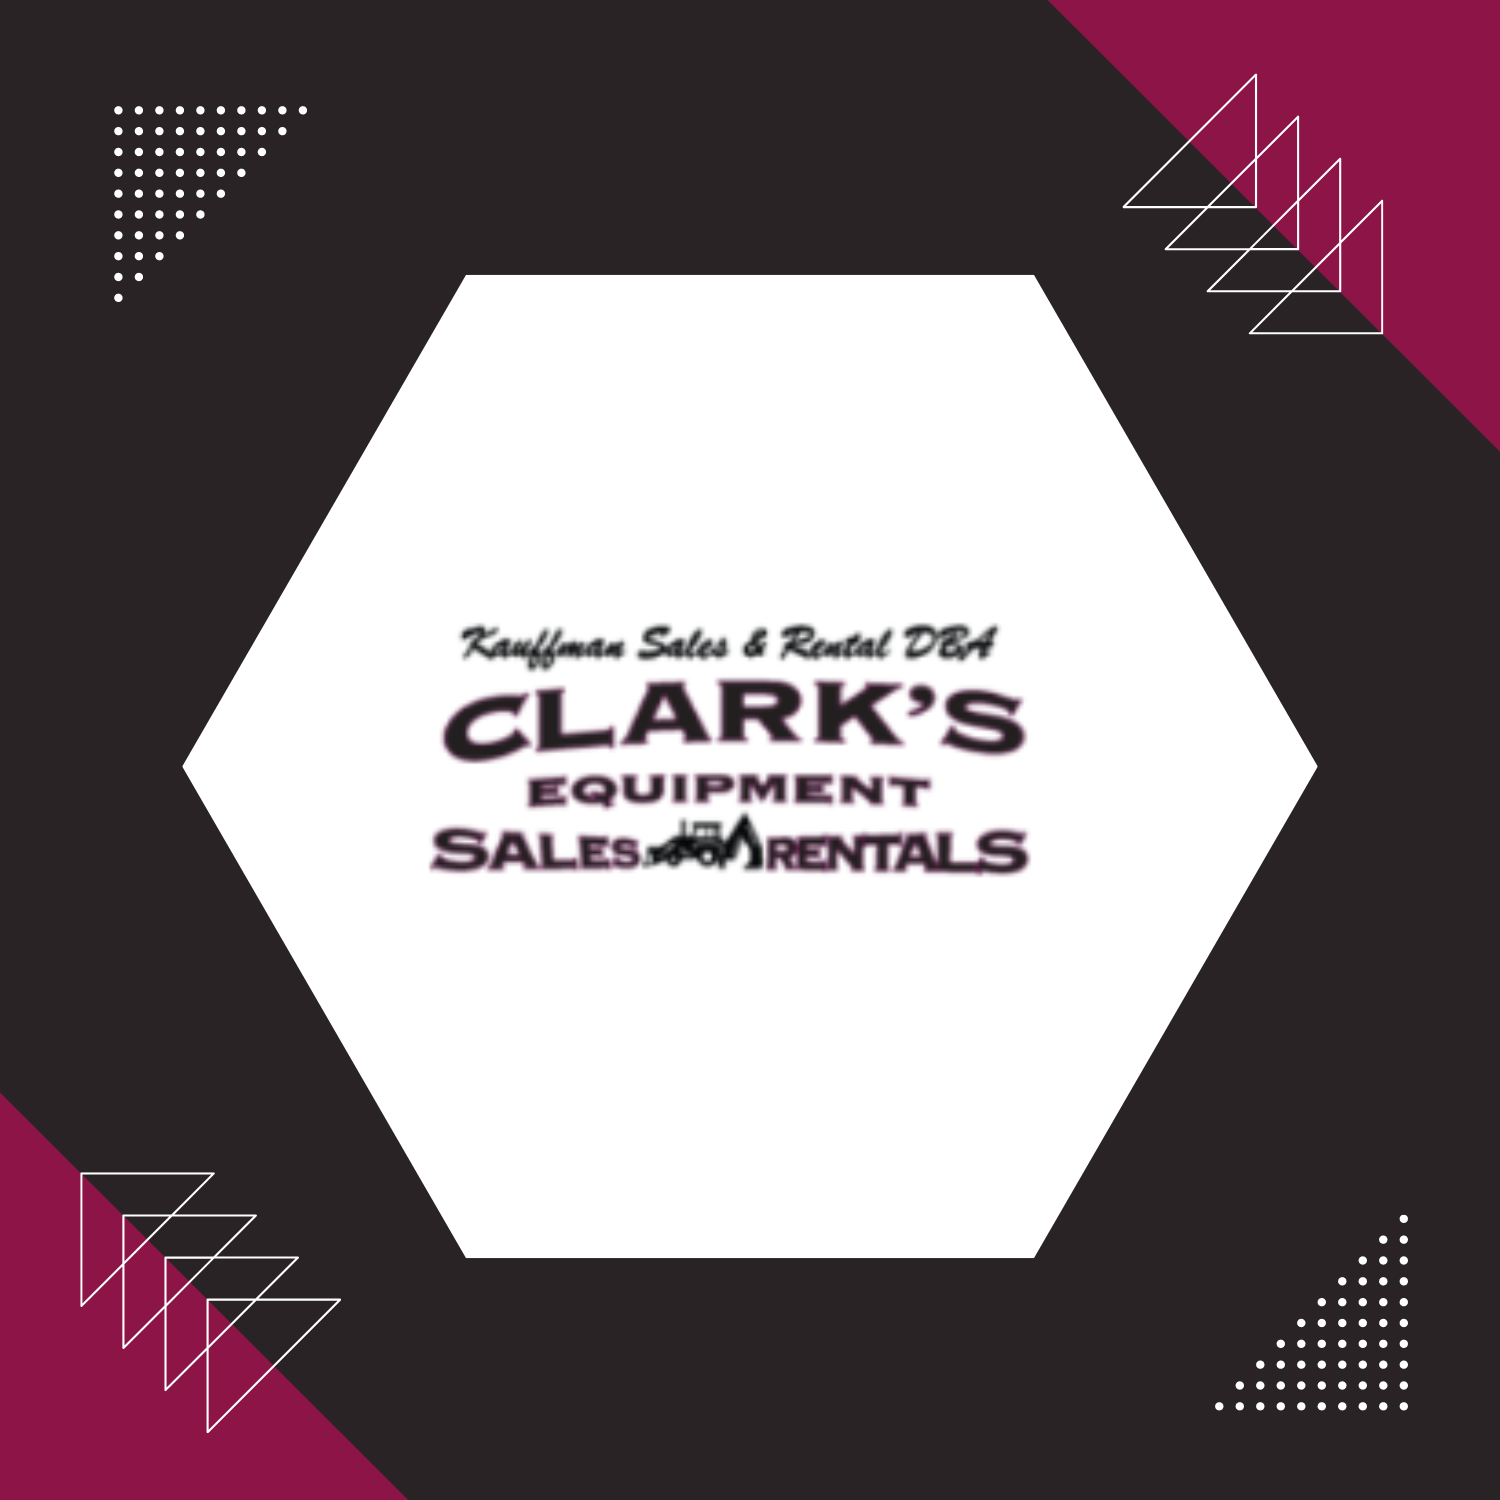 clarks-equipment-sales-and-rentals